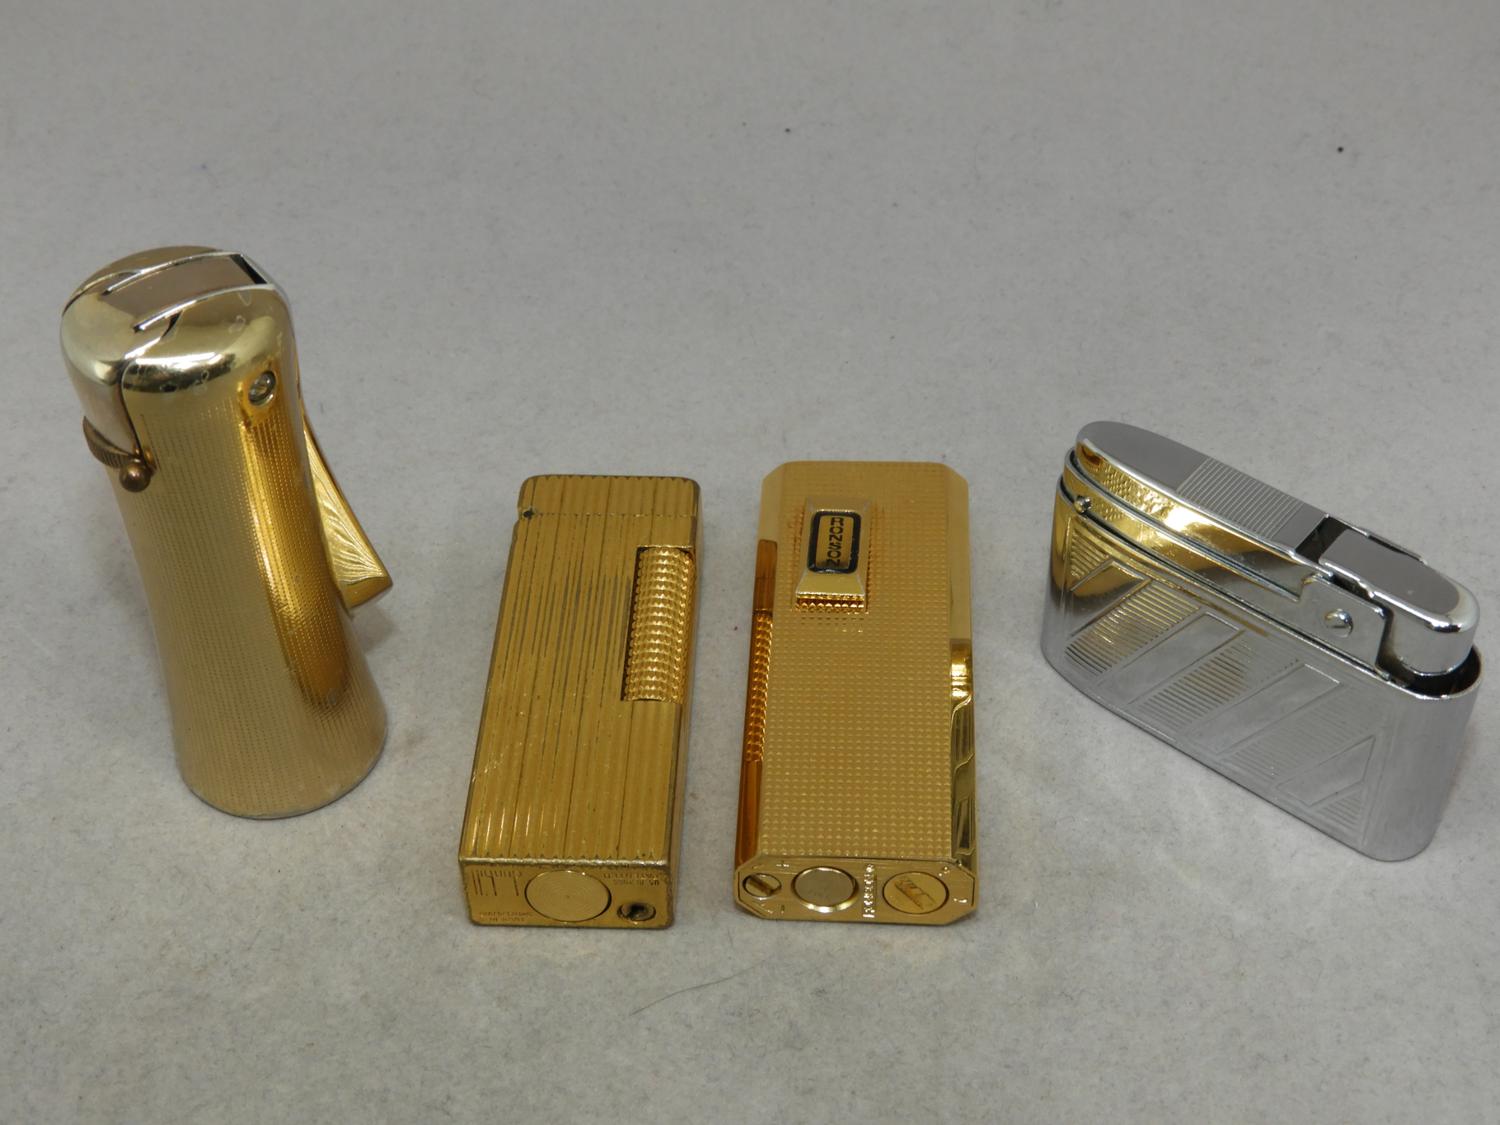 Murrays Auctioneers Lot 1: Vintage lighters